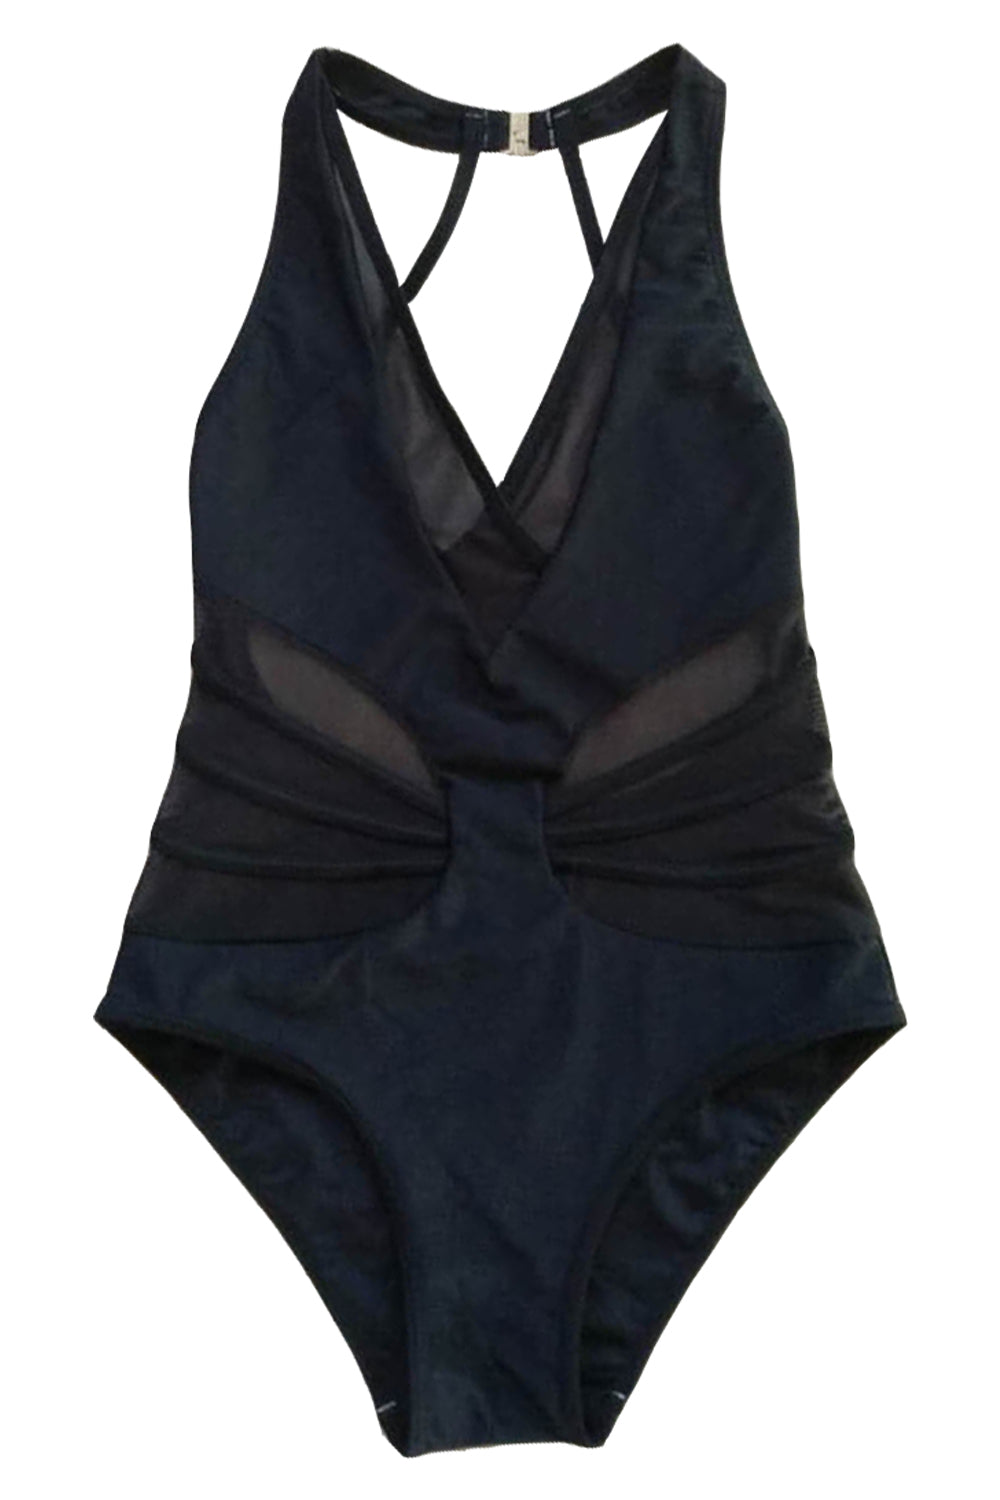 Iyasson Sexy Black See through Halter One-piece Swimsuit